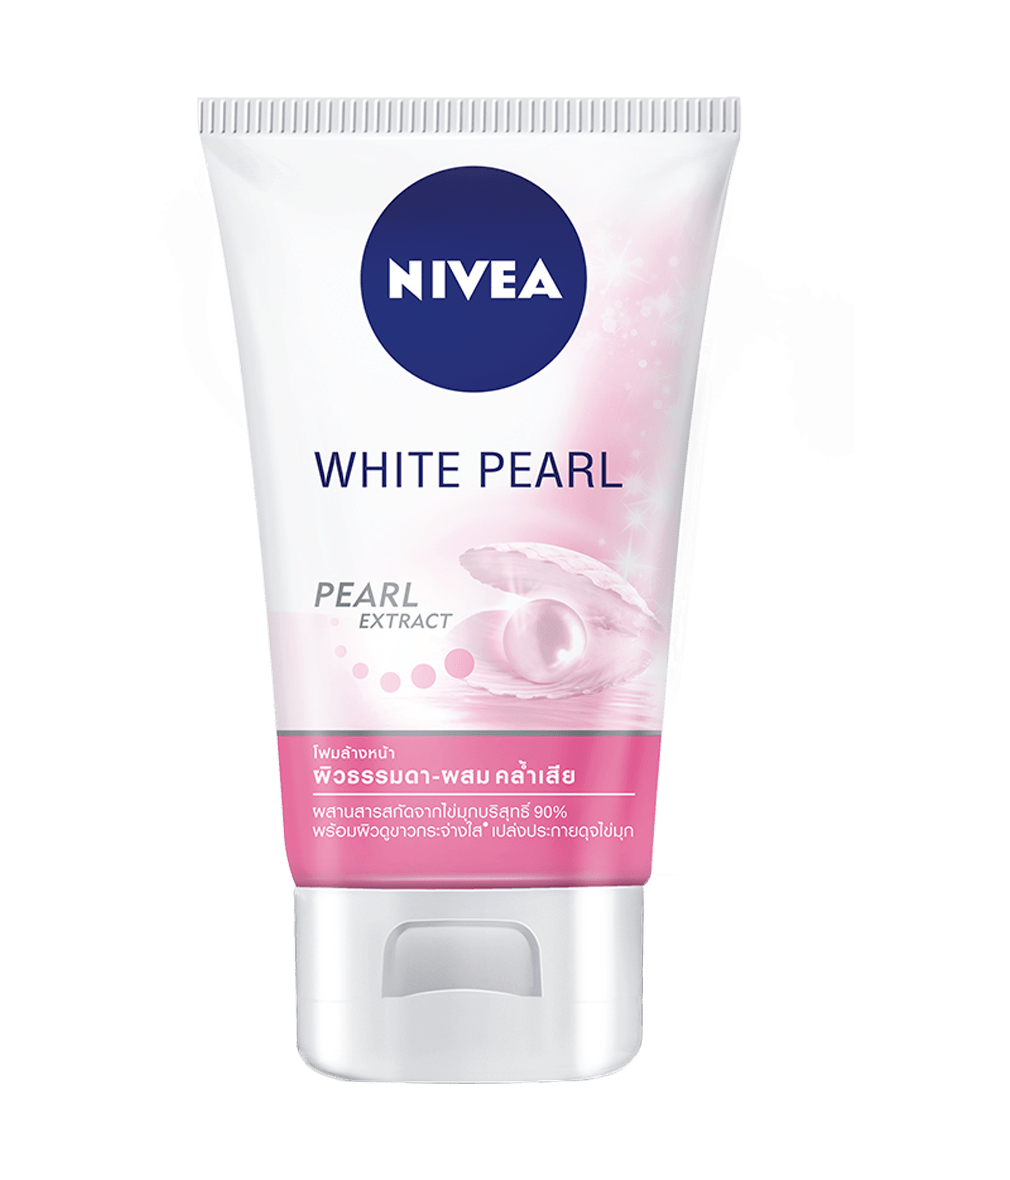 NIVEA WHITE PEARL FOAM